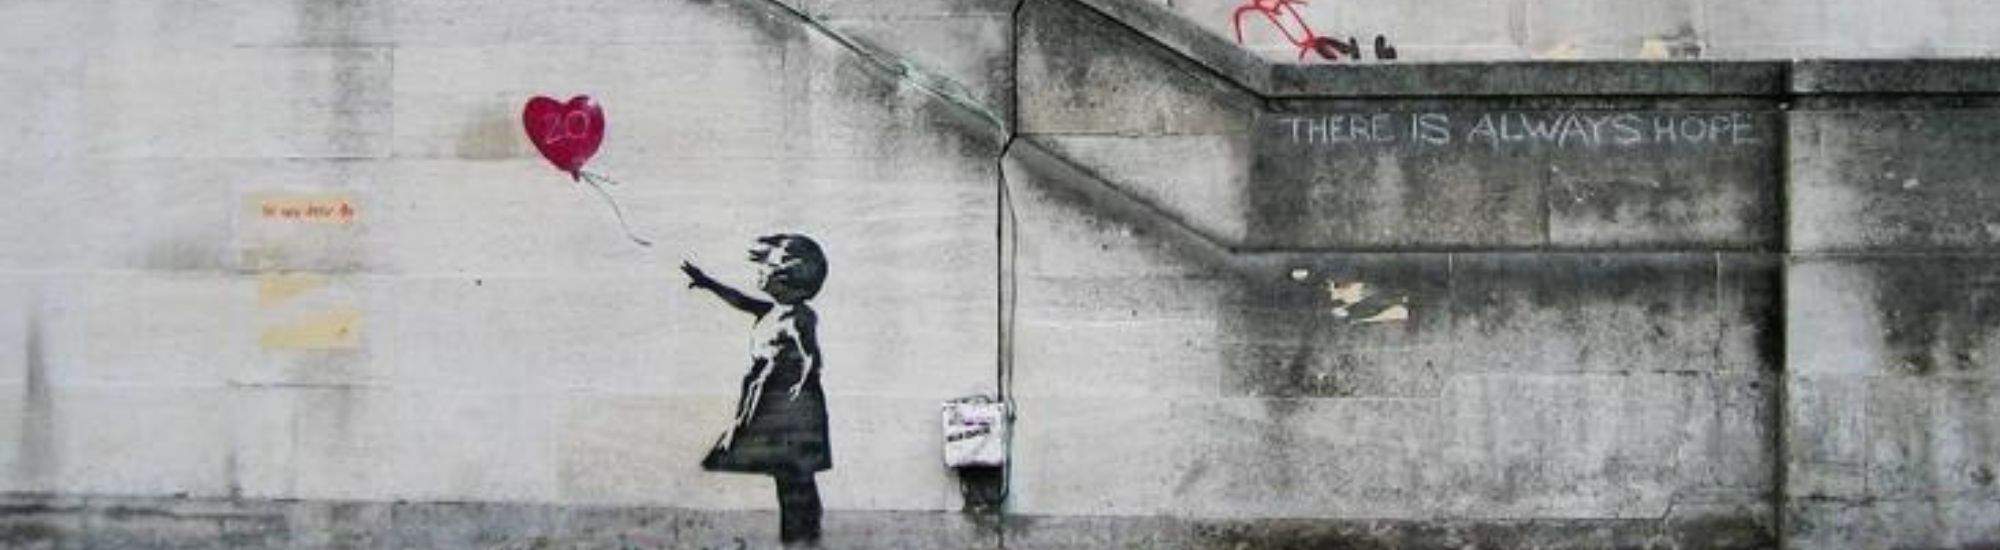 Banksy in Krakow: World-Renowned Street Art